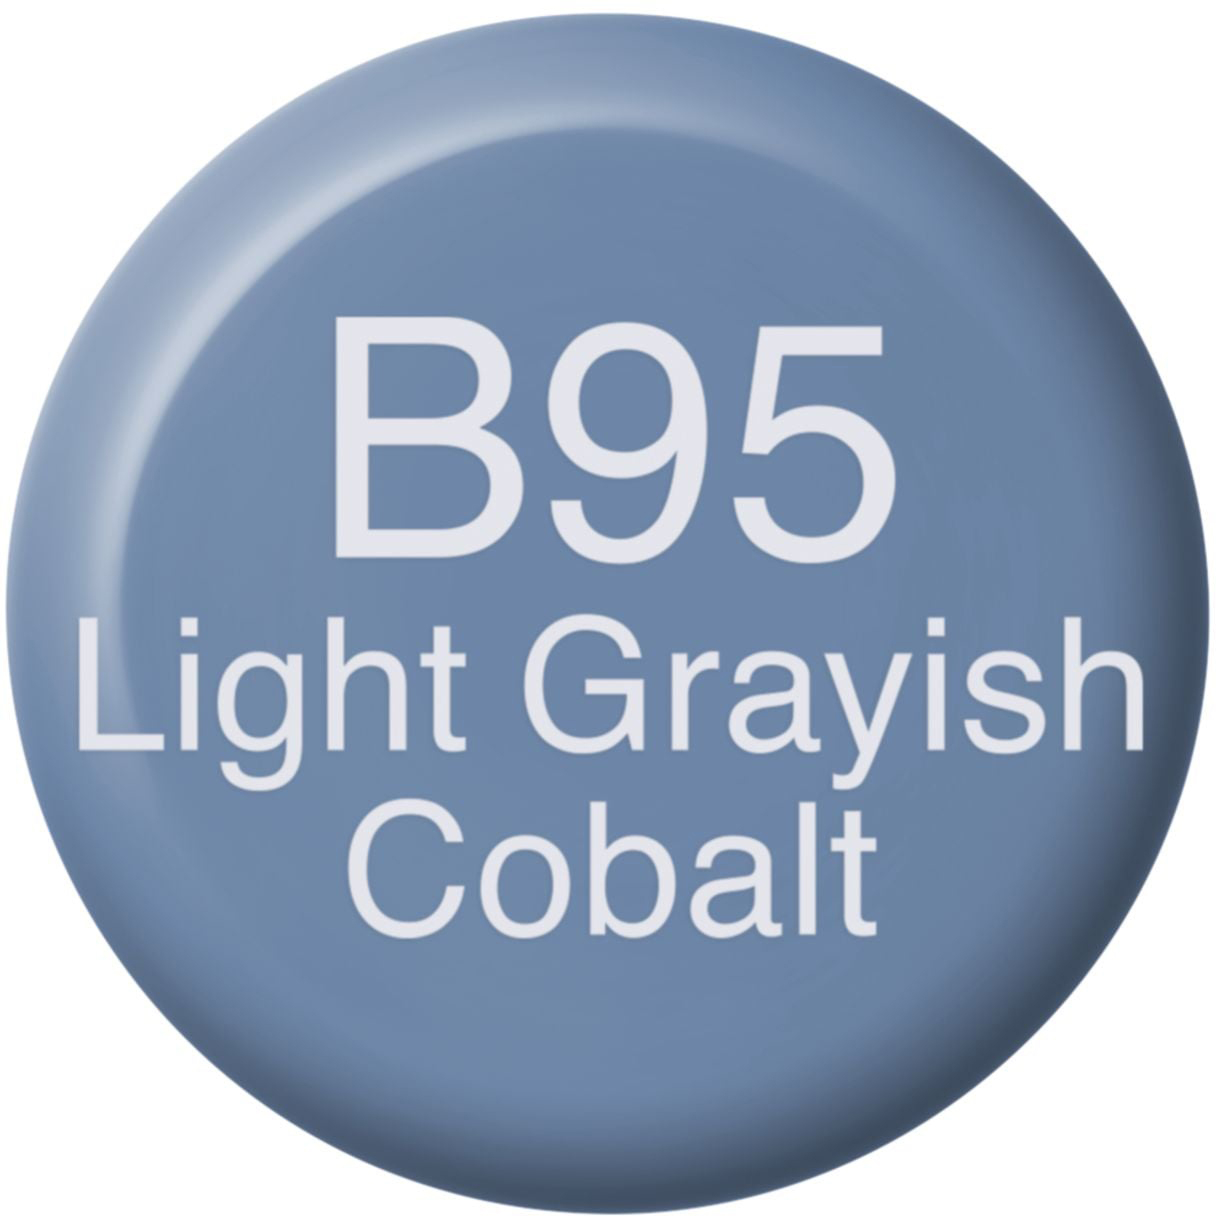 COPIC Ink Refill 21076156 B95 - Light Greyish Cobalt B95 - Light Greyish Cobalt